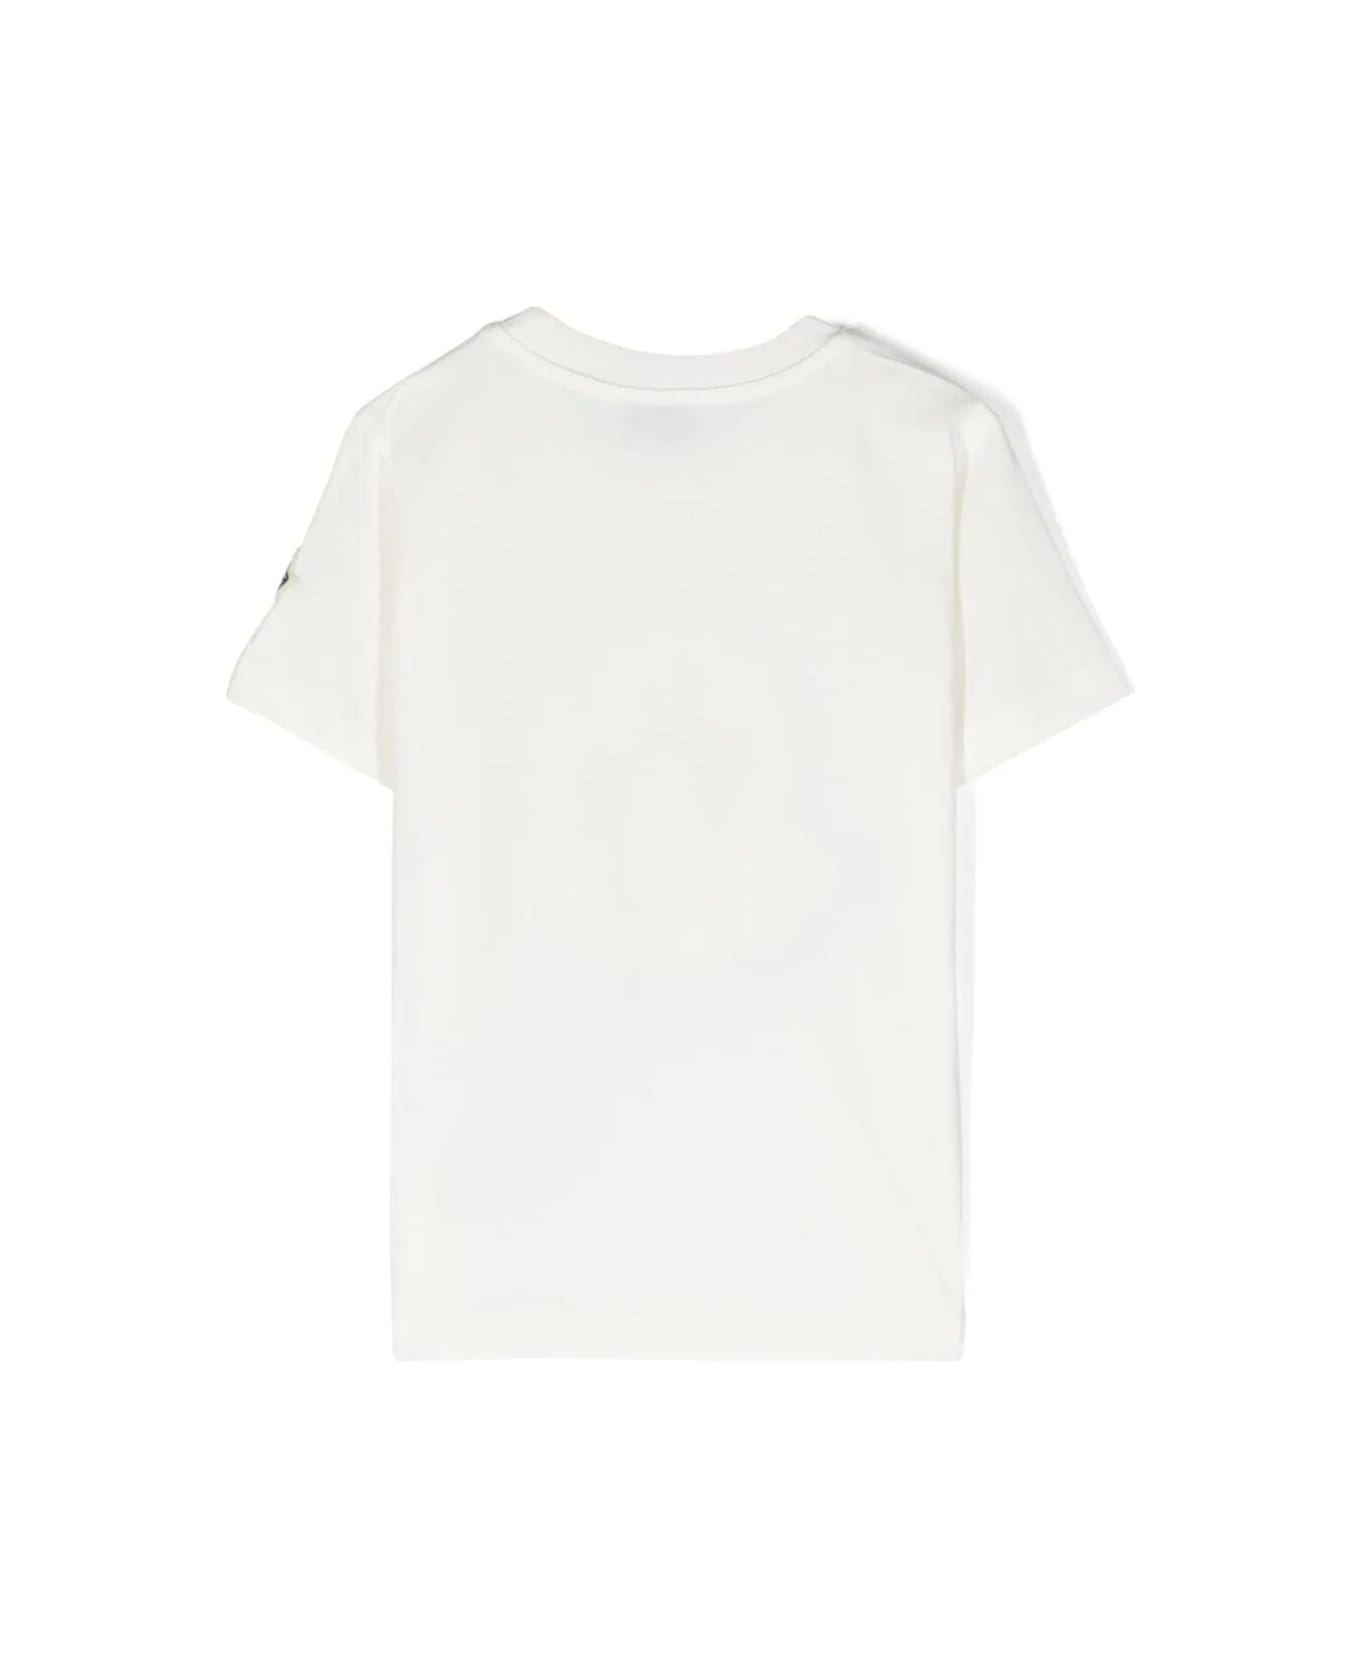 Moncler Ss T-shirt - White